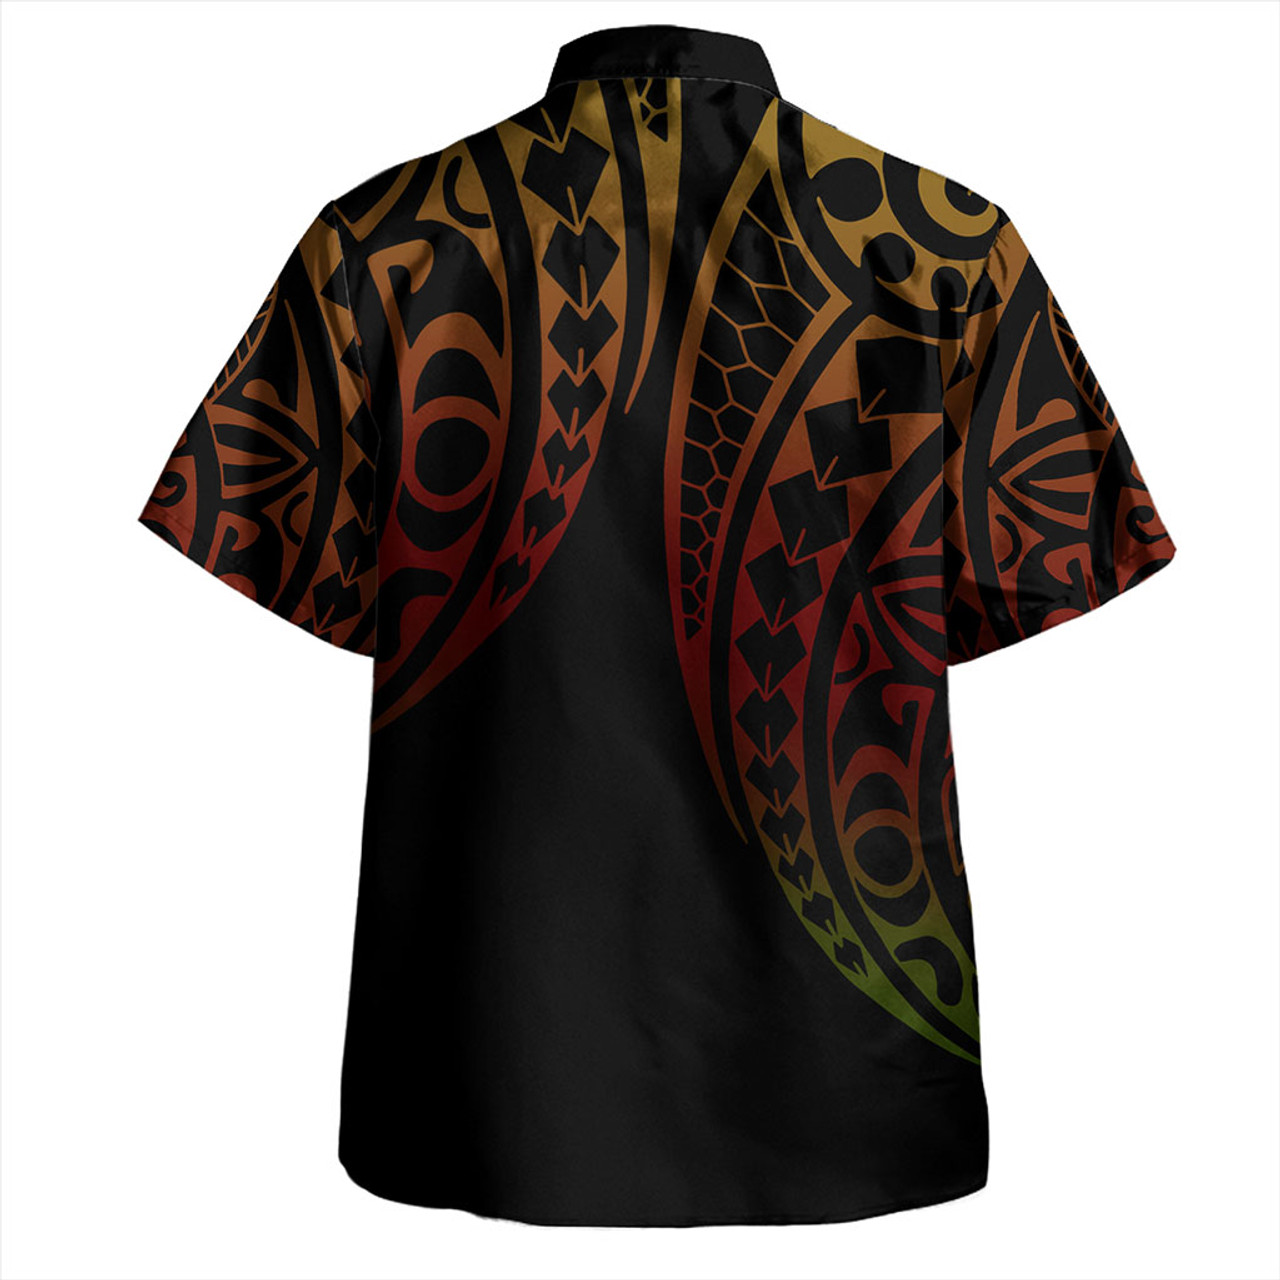 Tahiti Combo Dress And Shirt Kakau Style Reggae